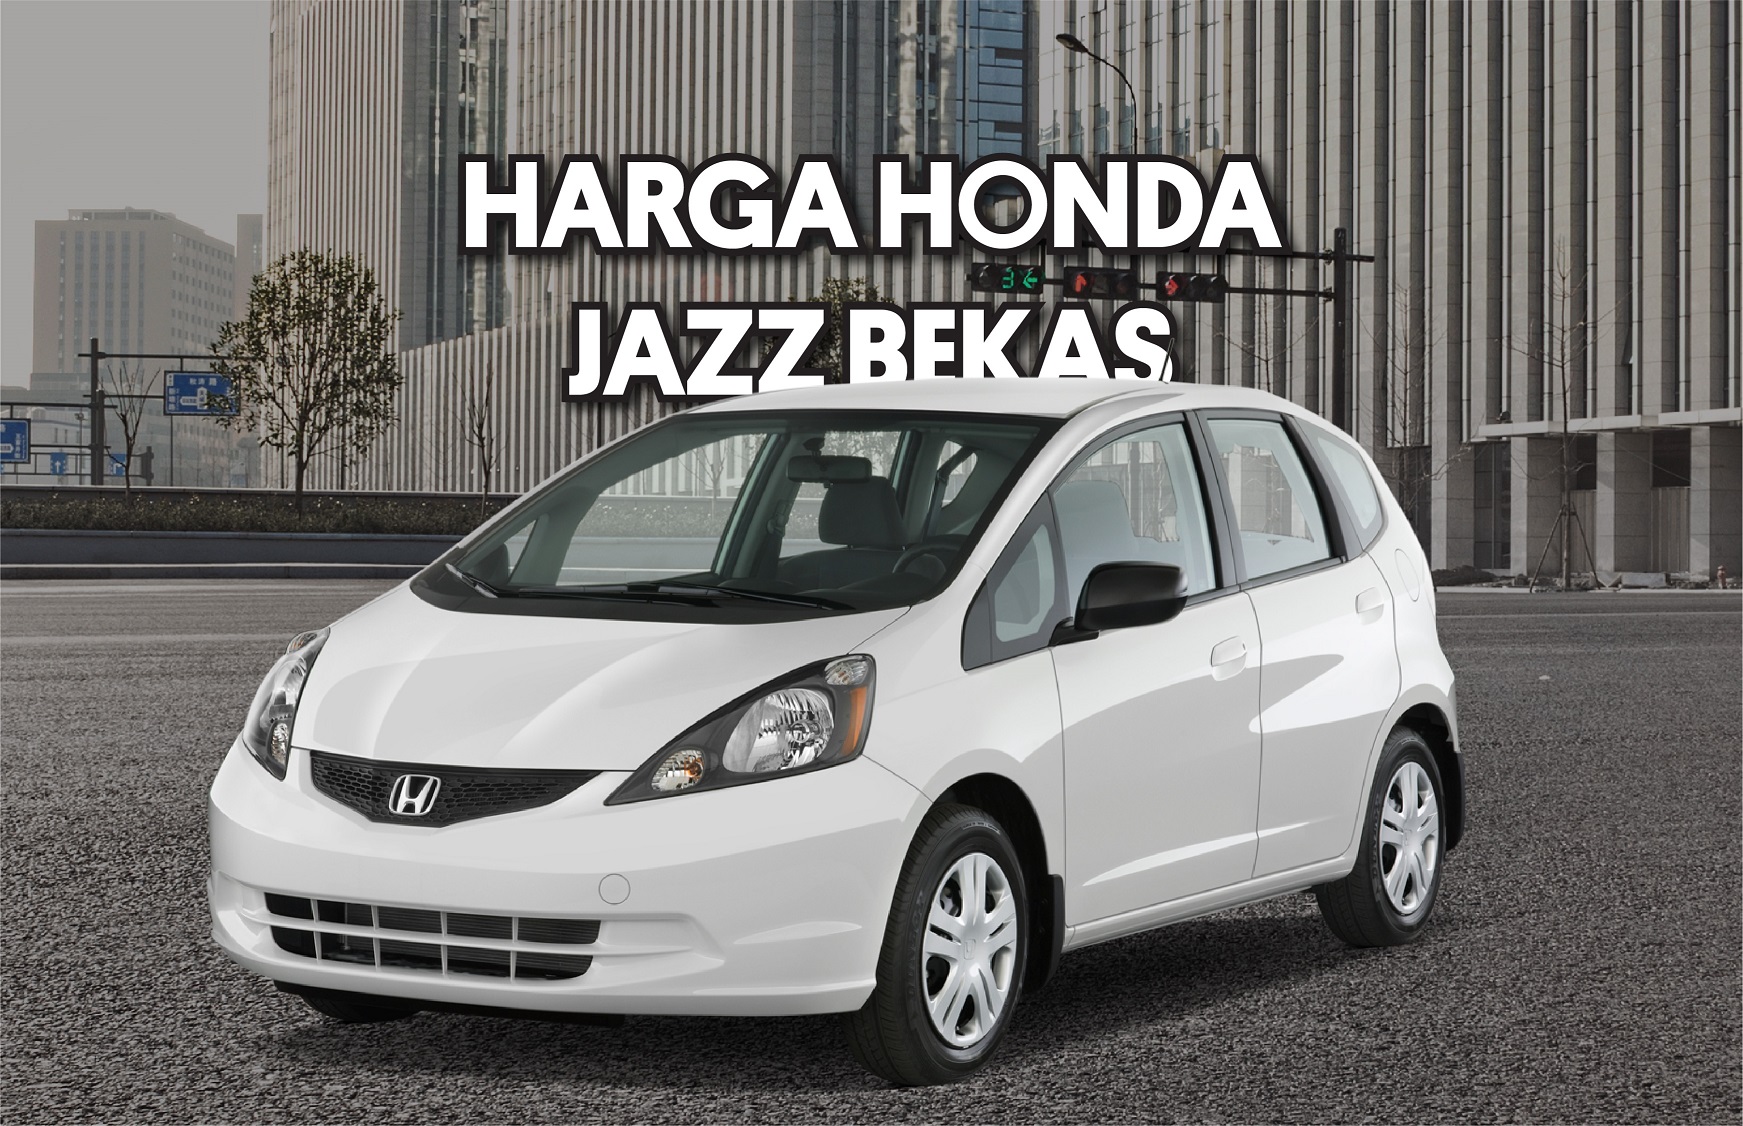 Honda Jazz. (OLX.co.id)